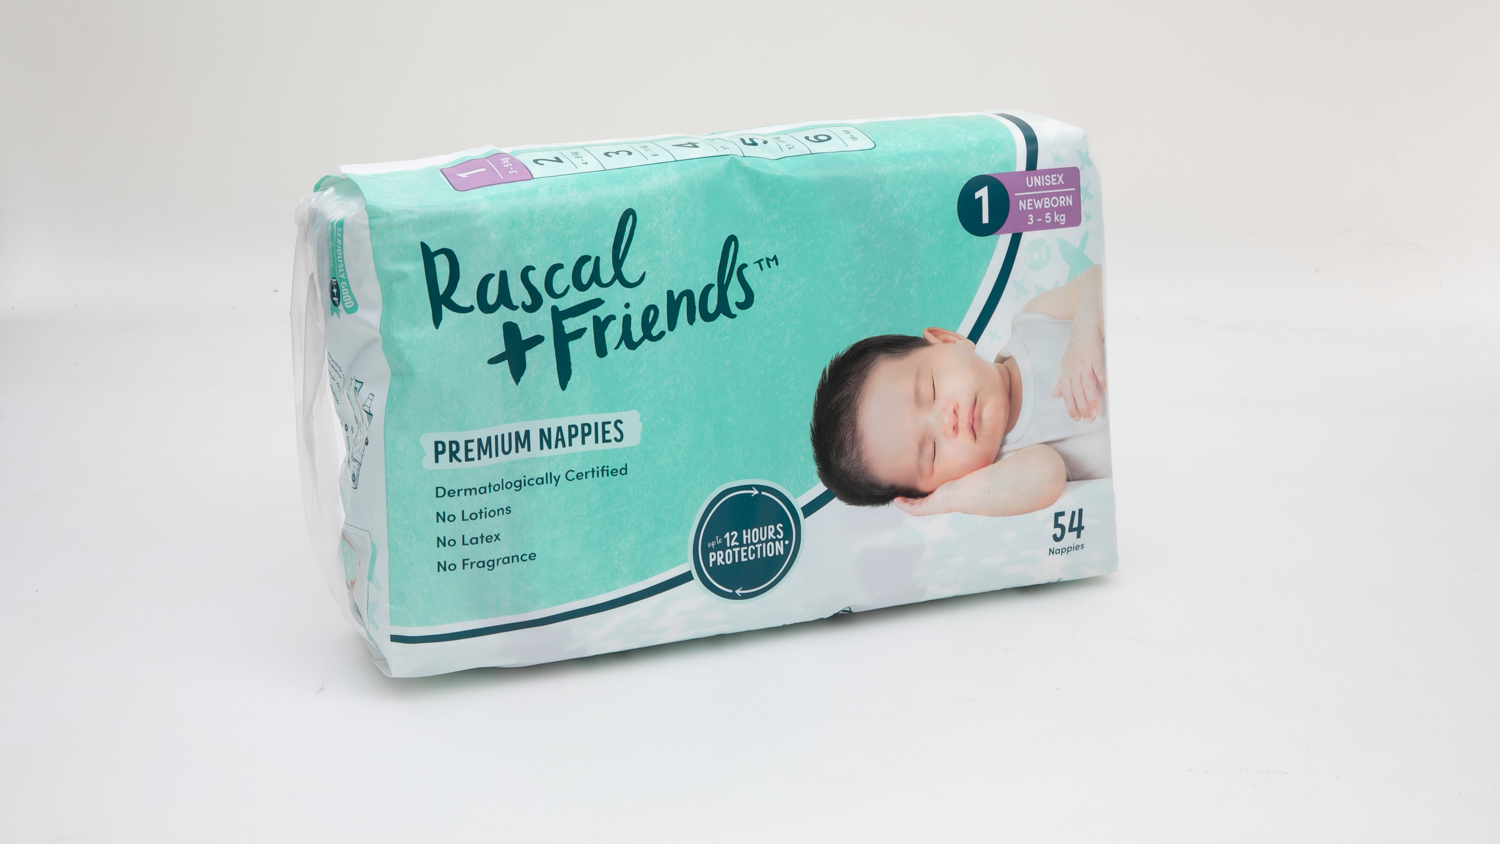 https://pdbimg.choice.com.au/rascal-friends-premium-nappies-unisex-newborn-size-1_1.jpg